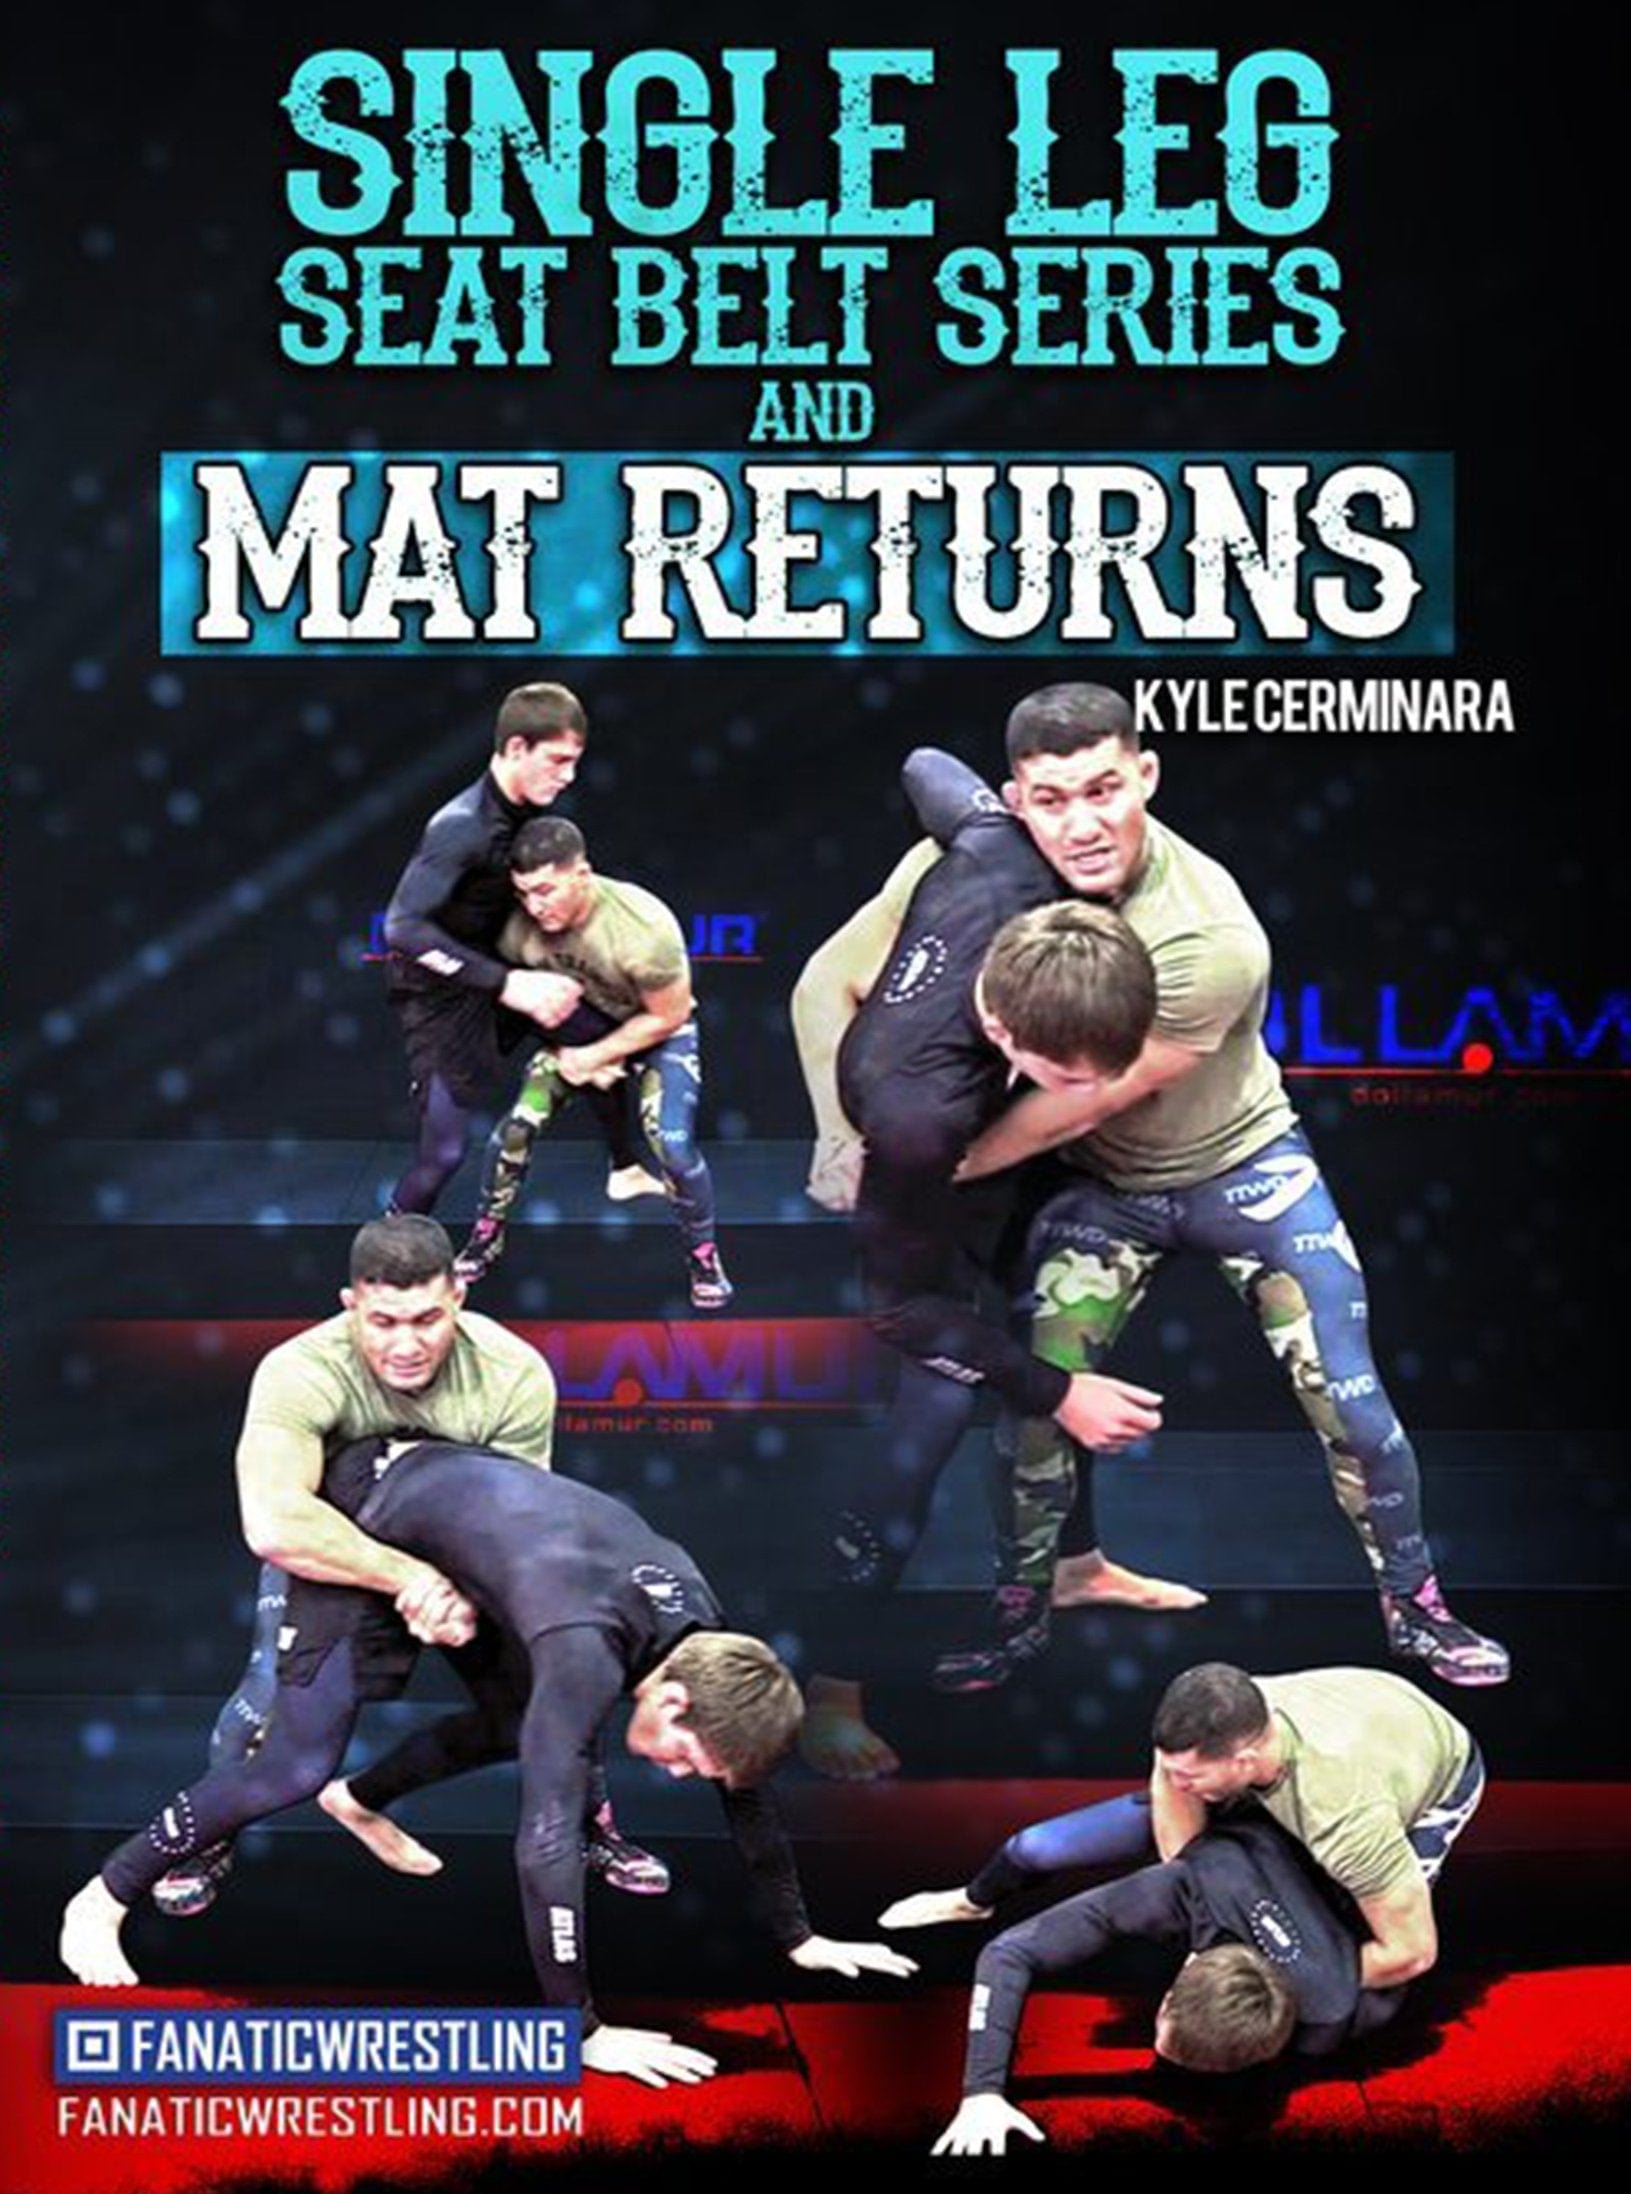 Single Leg Seat Belt Series and Mat Returns by Kyle Cerminara - Fanatic Wrestling